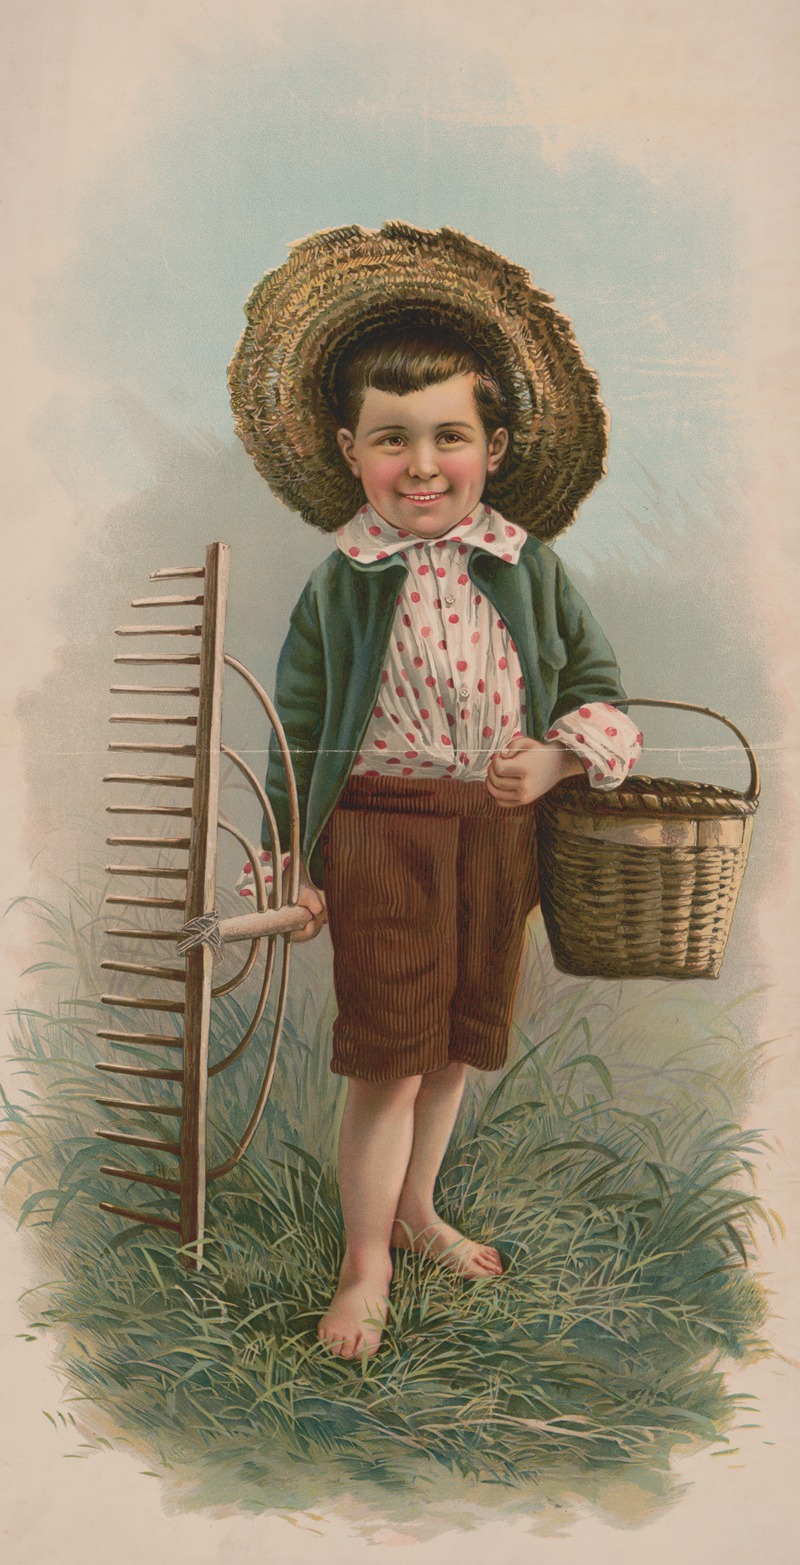 Julius Bien & Company - Little boy with straw hat, basket, and rake